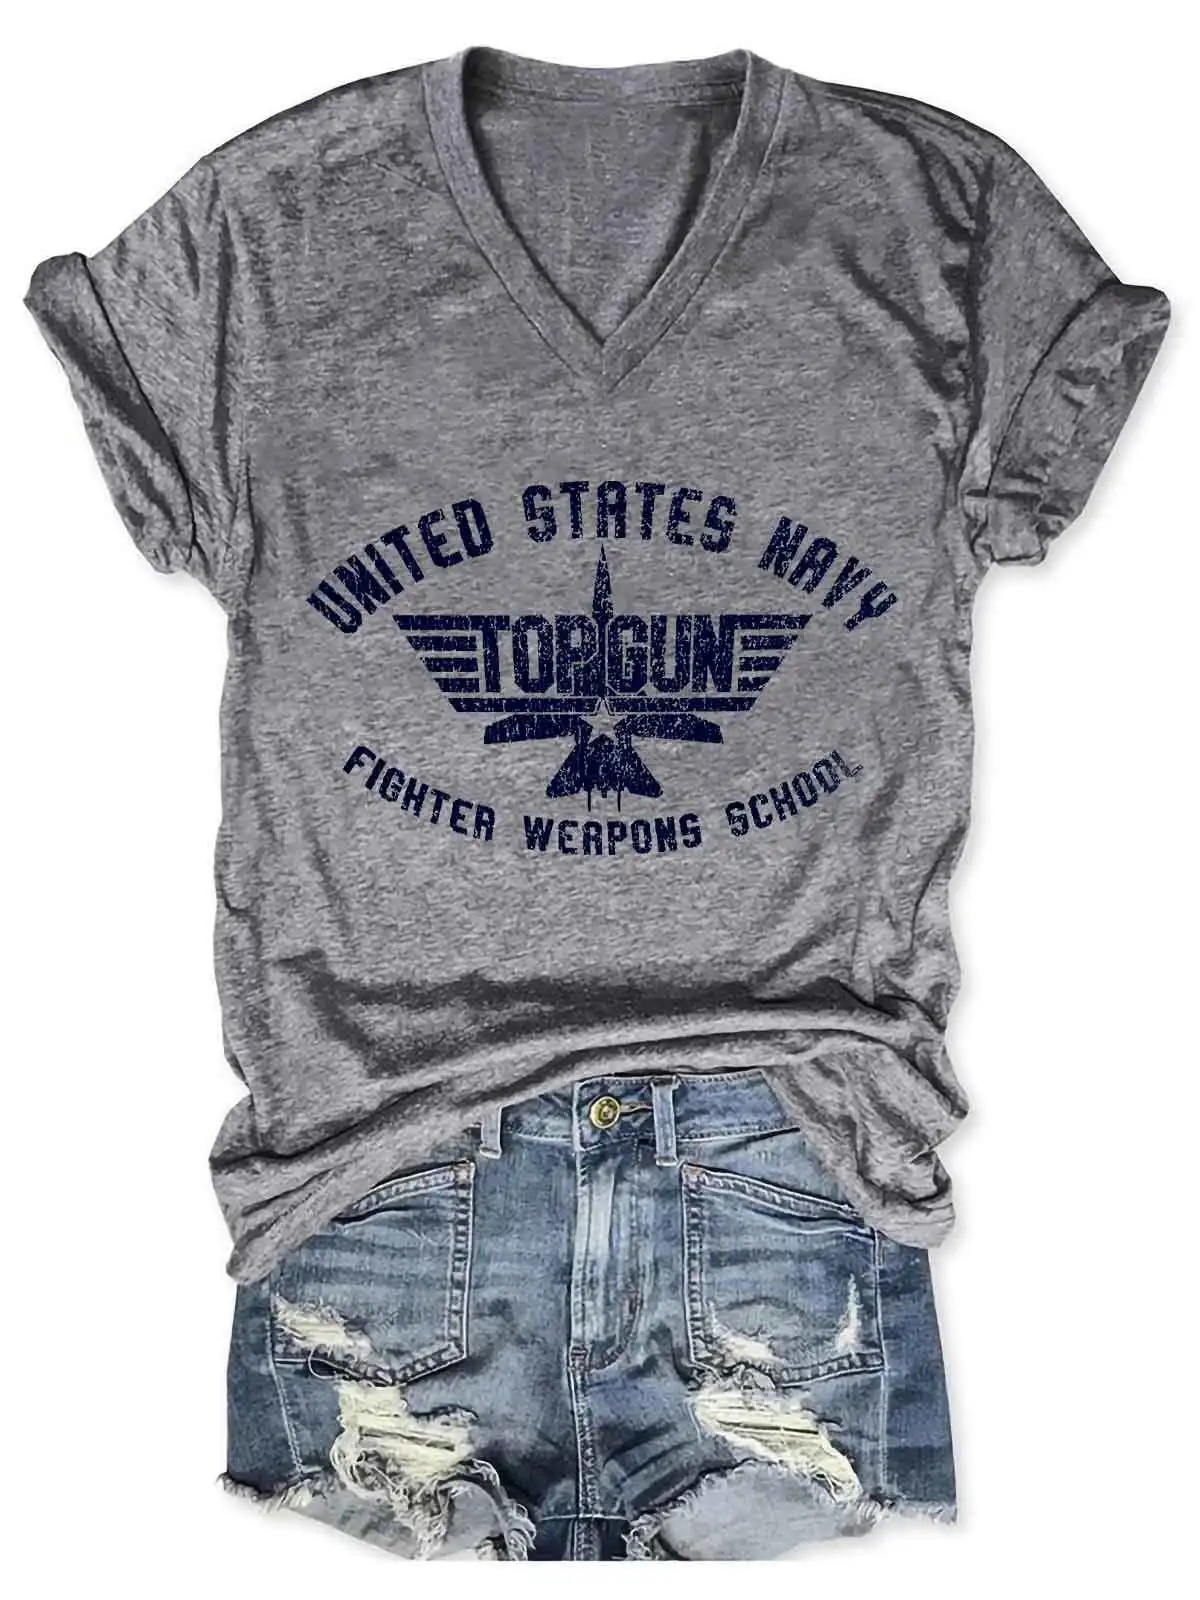 Women's Top Gun Inspired United States Navy Fighter Weapons School V-Neck T-Shirt